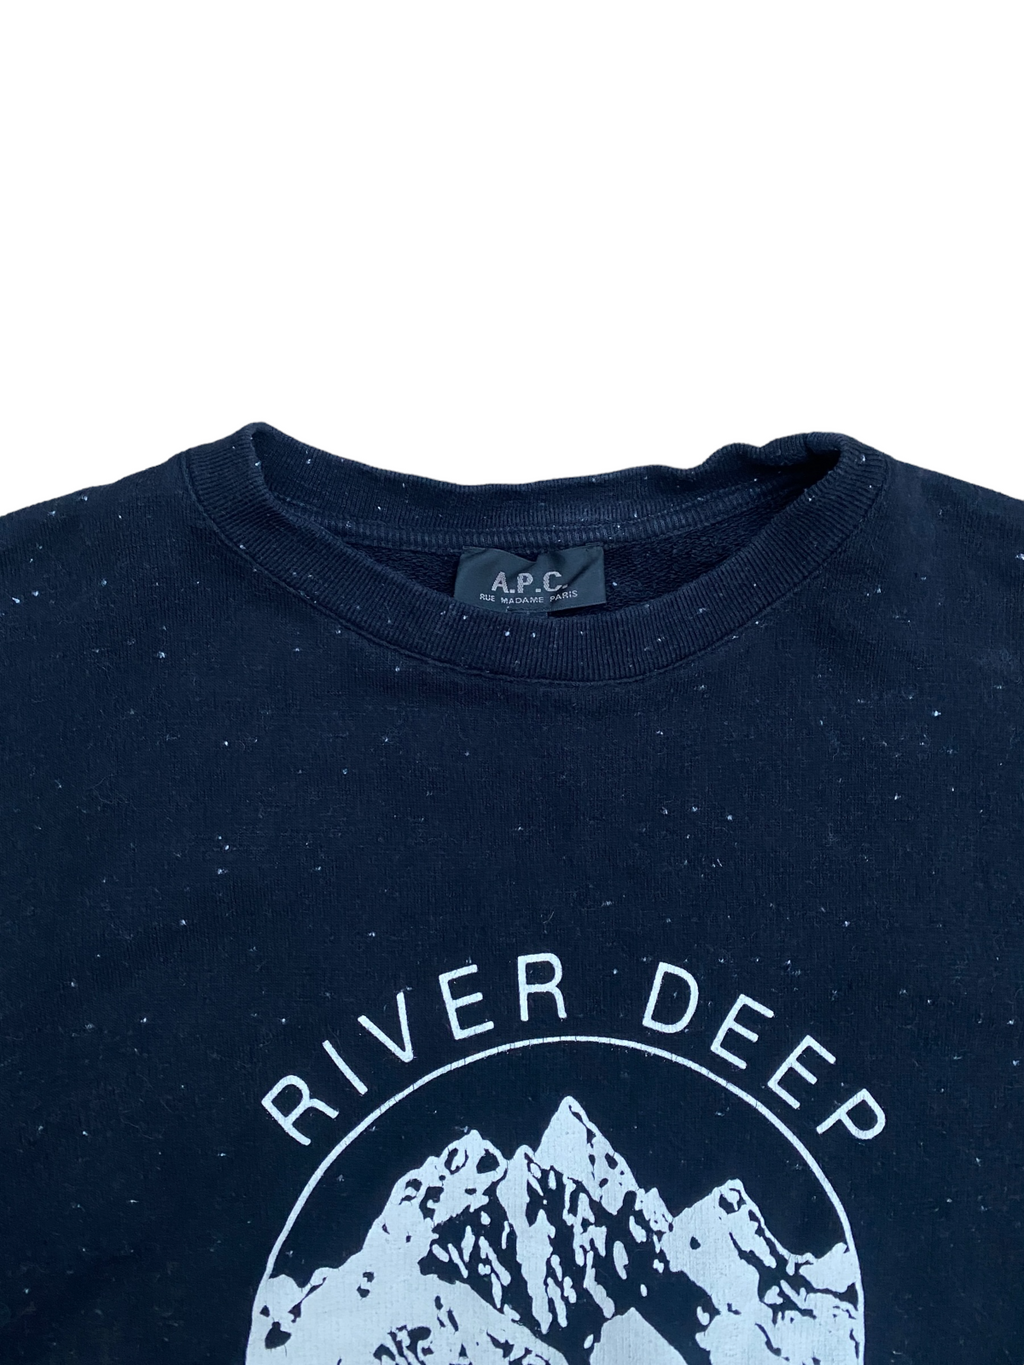 Black River Deep Sweater